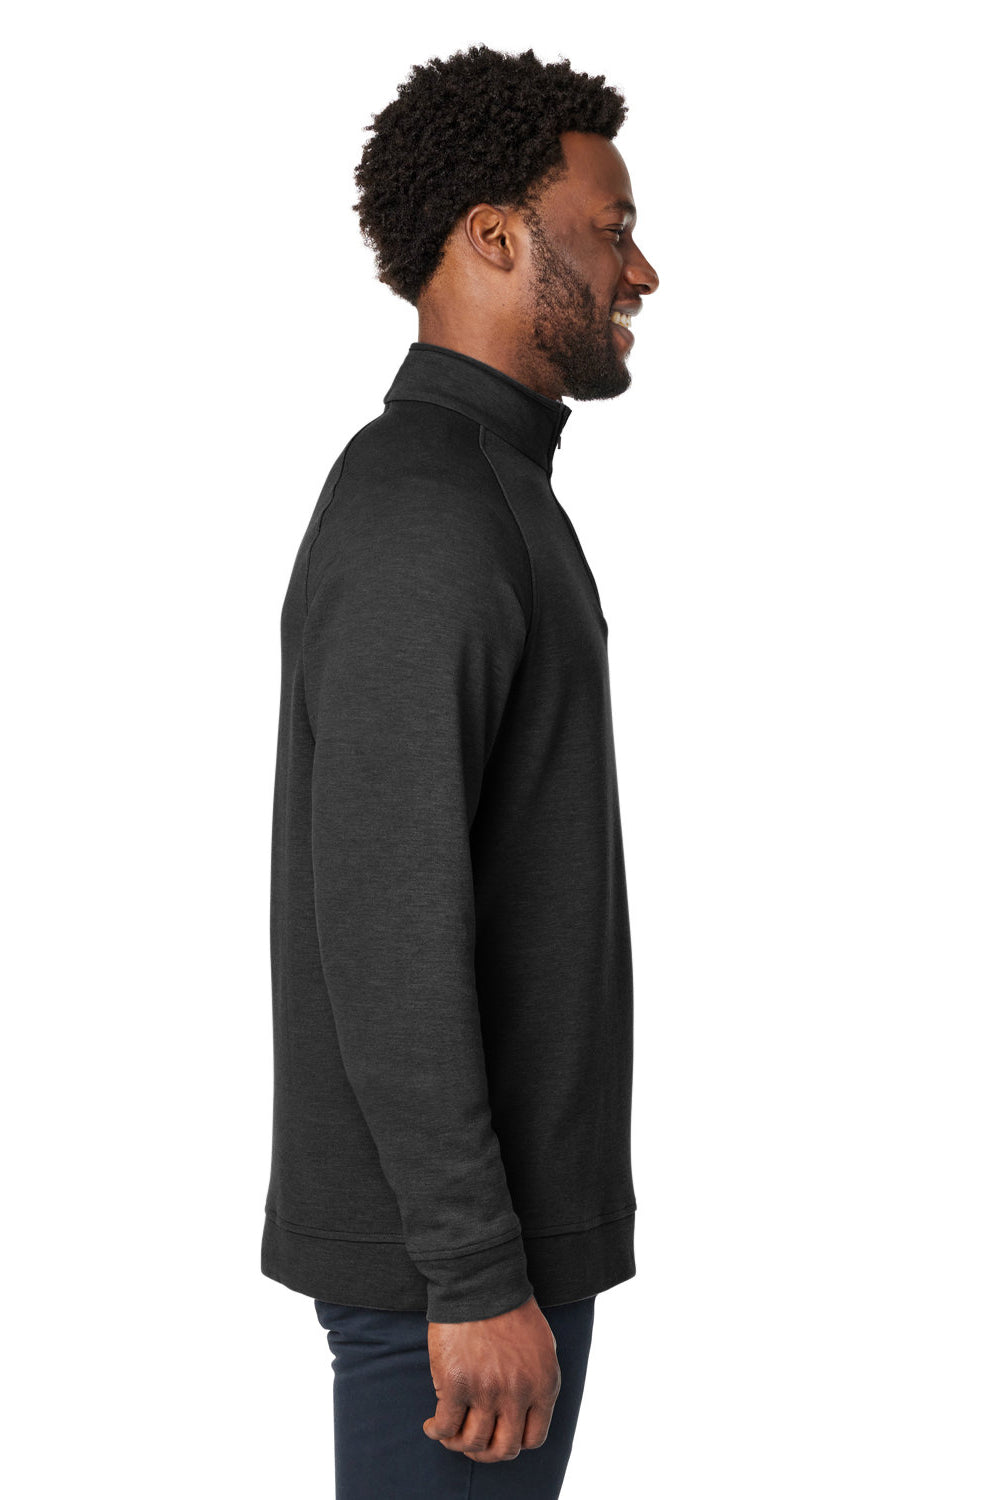 Devon & Jones DG481 Mens New Classics Charleston 1/4 Zip Sweatshirt Black Melange Side